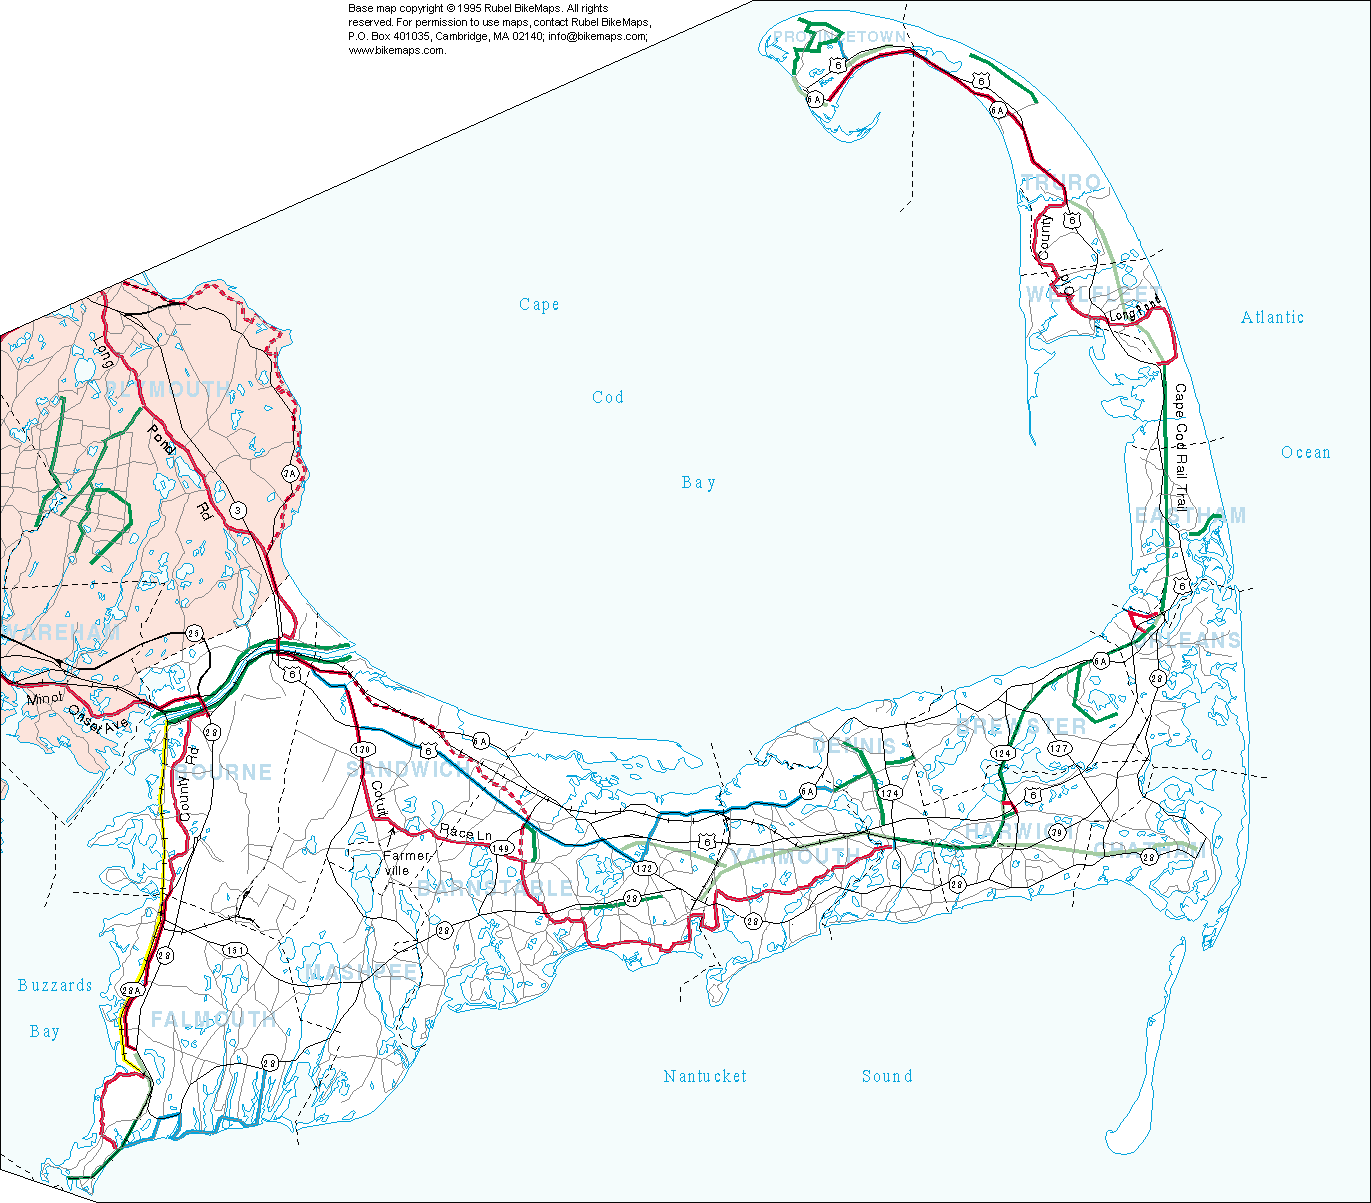 Cape Cod map (90 kB)